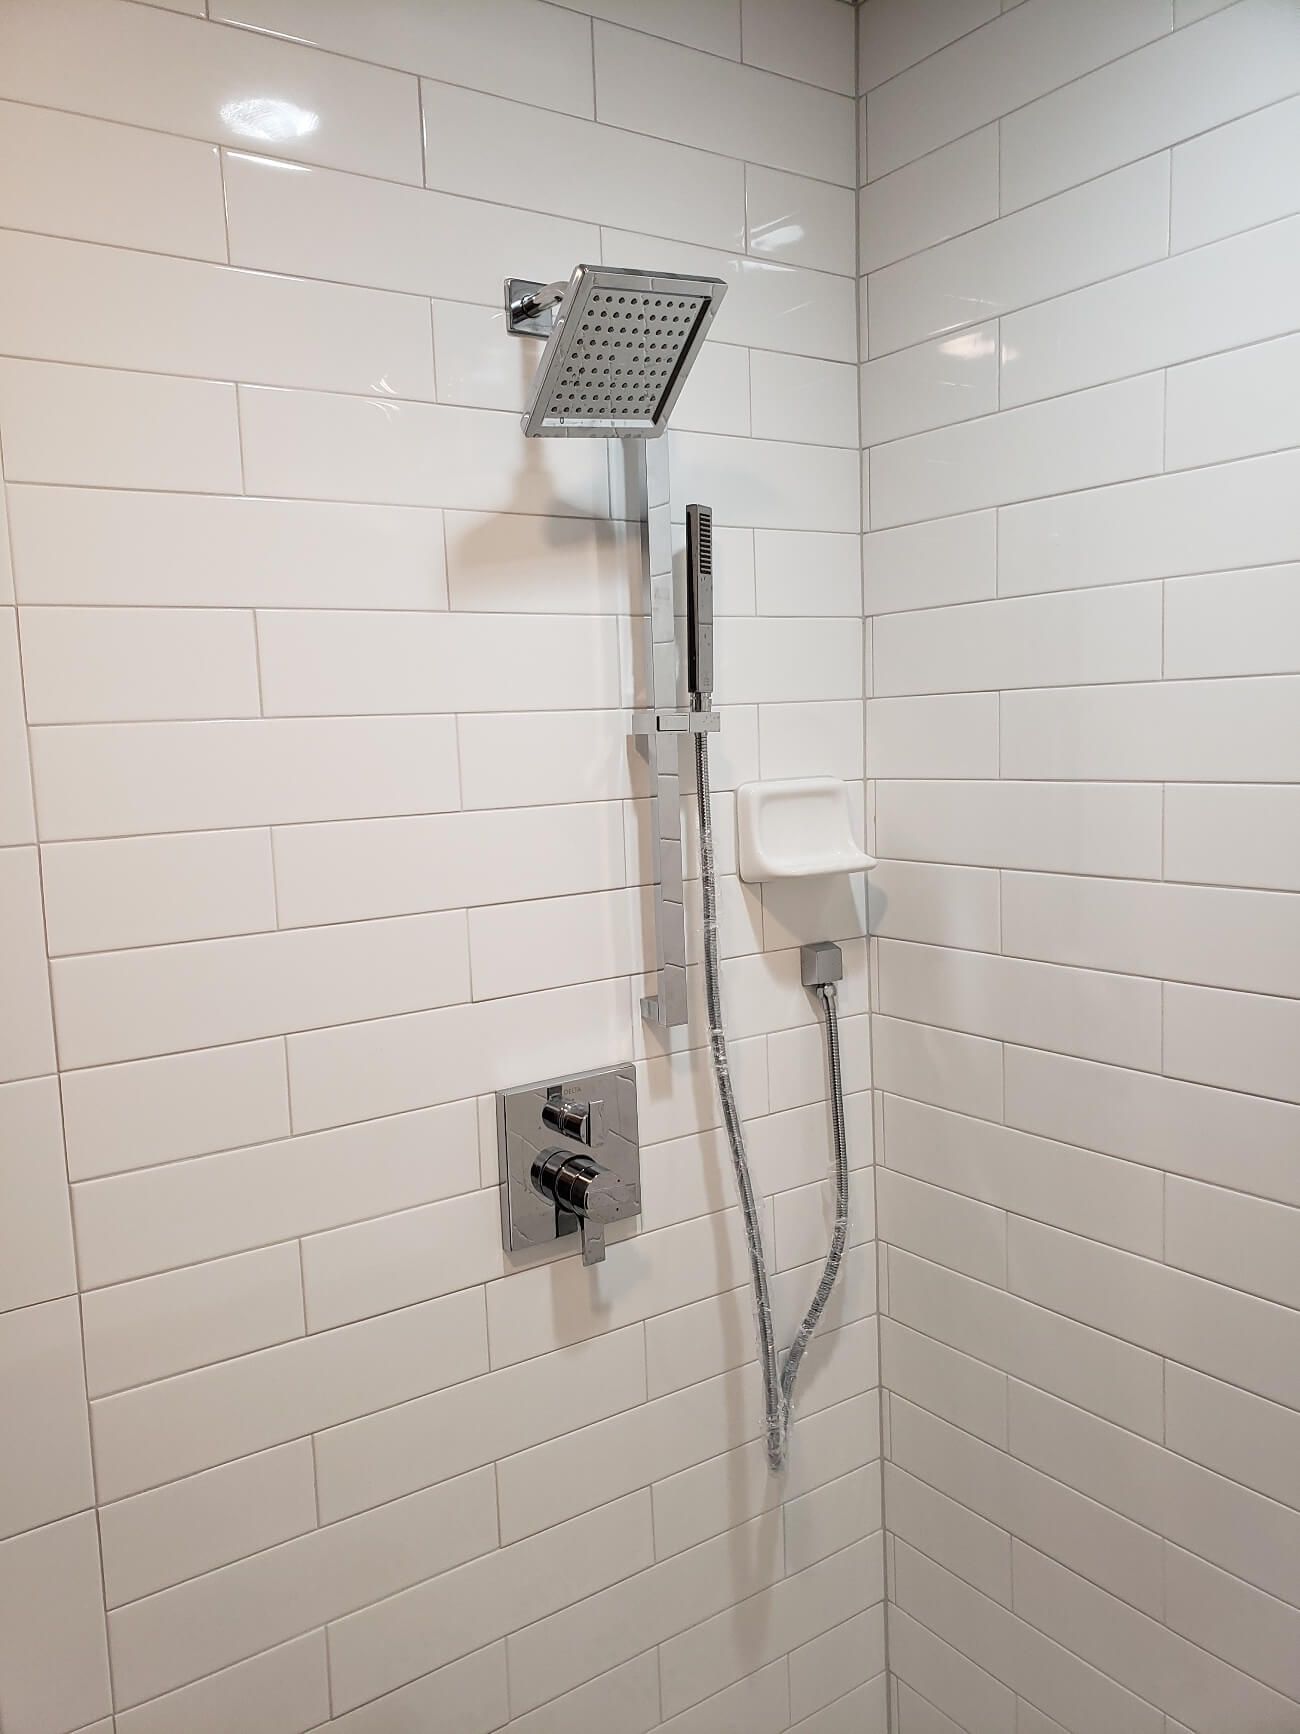 local bathroom renovations glen ellyn